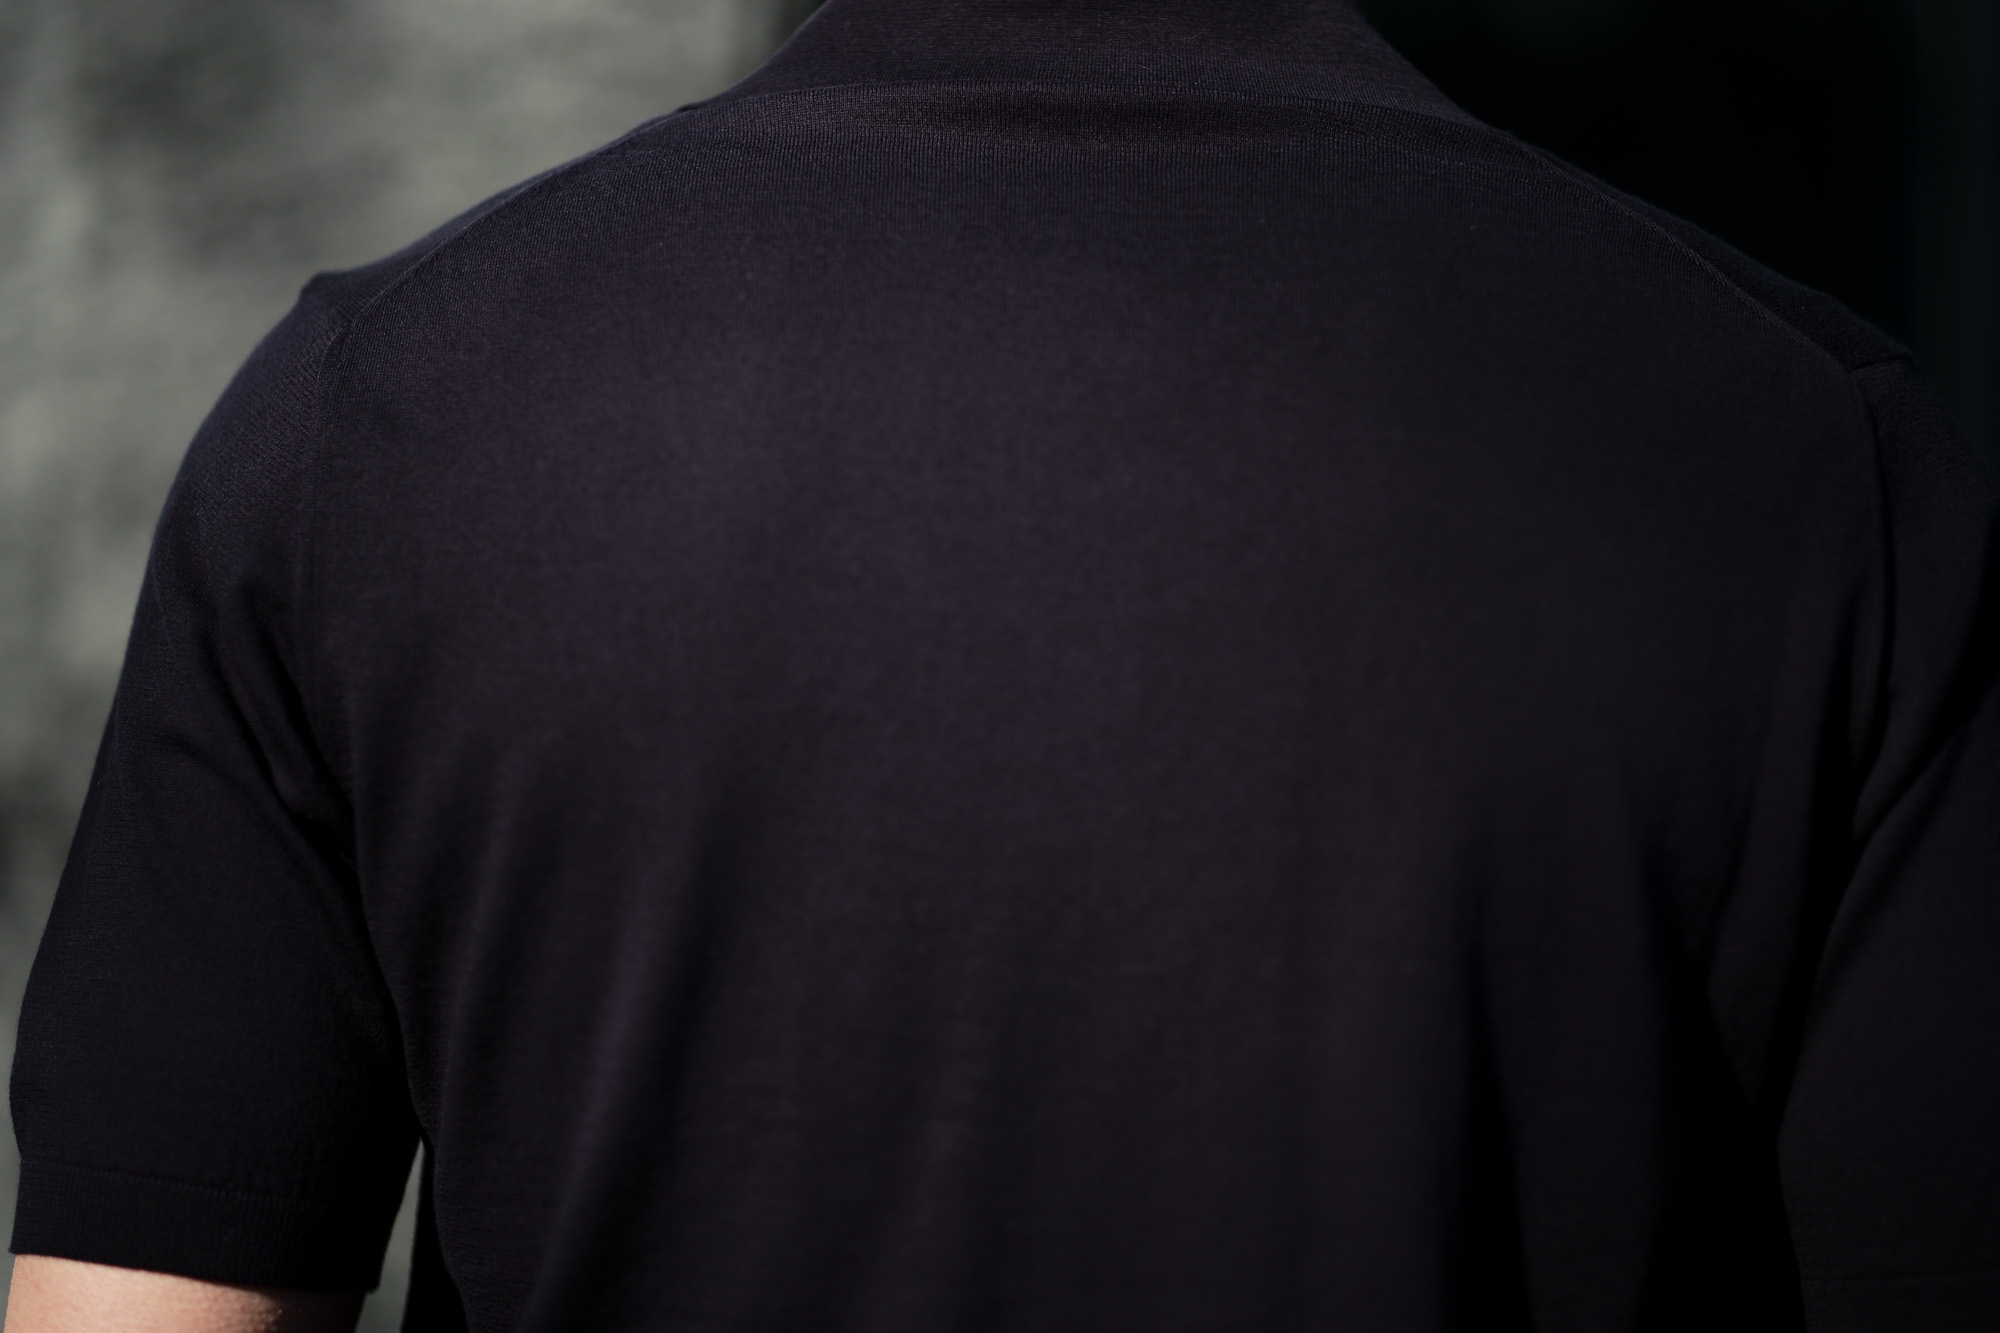 Cruciani(クルチアーニ) 33G Knit Polo Shirt 33ゲージ コットン ニット ポロシャツ NAVY (ネイビー・Z0064) made in italy (イタリア製) 2020 春夏新作  愛知 名古屋 altoediritto アルトエデリット